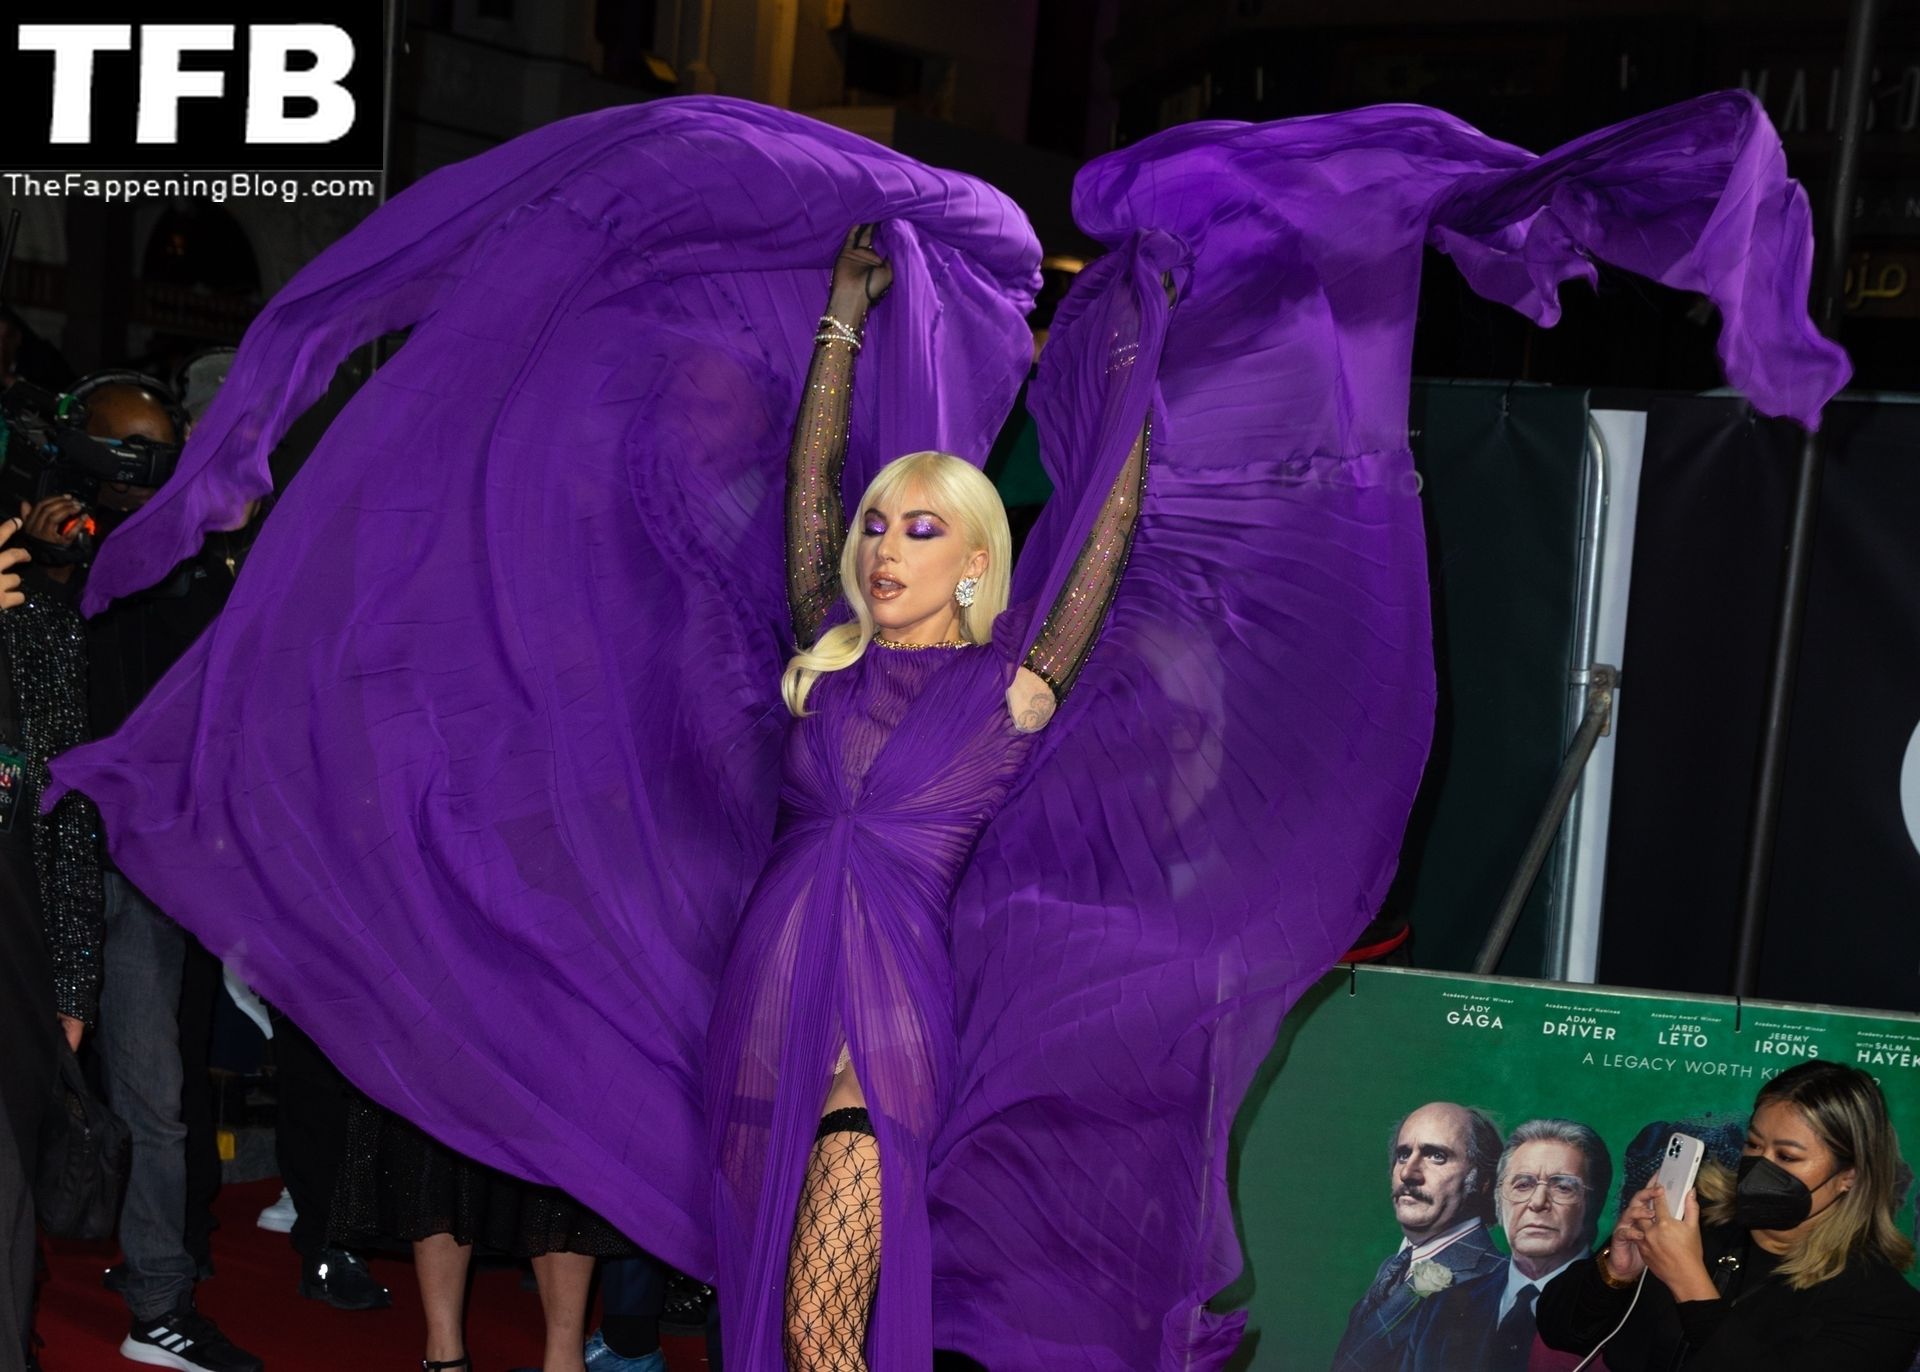 Lady-Gaga-Sexy-The-Fappening-Blog-71.jpg